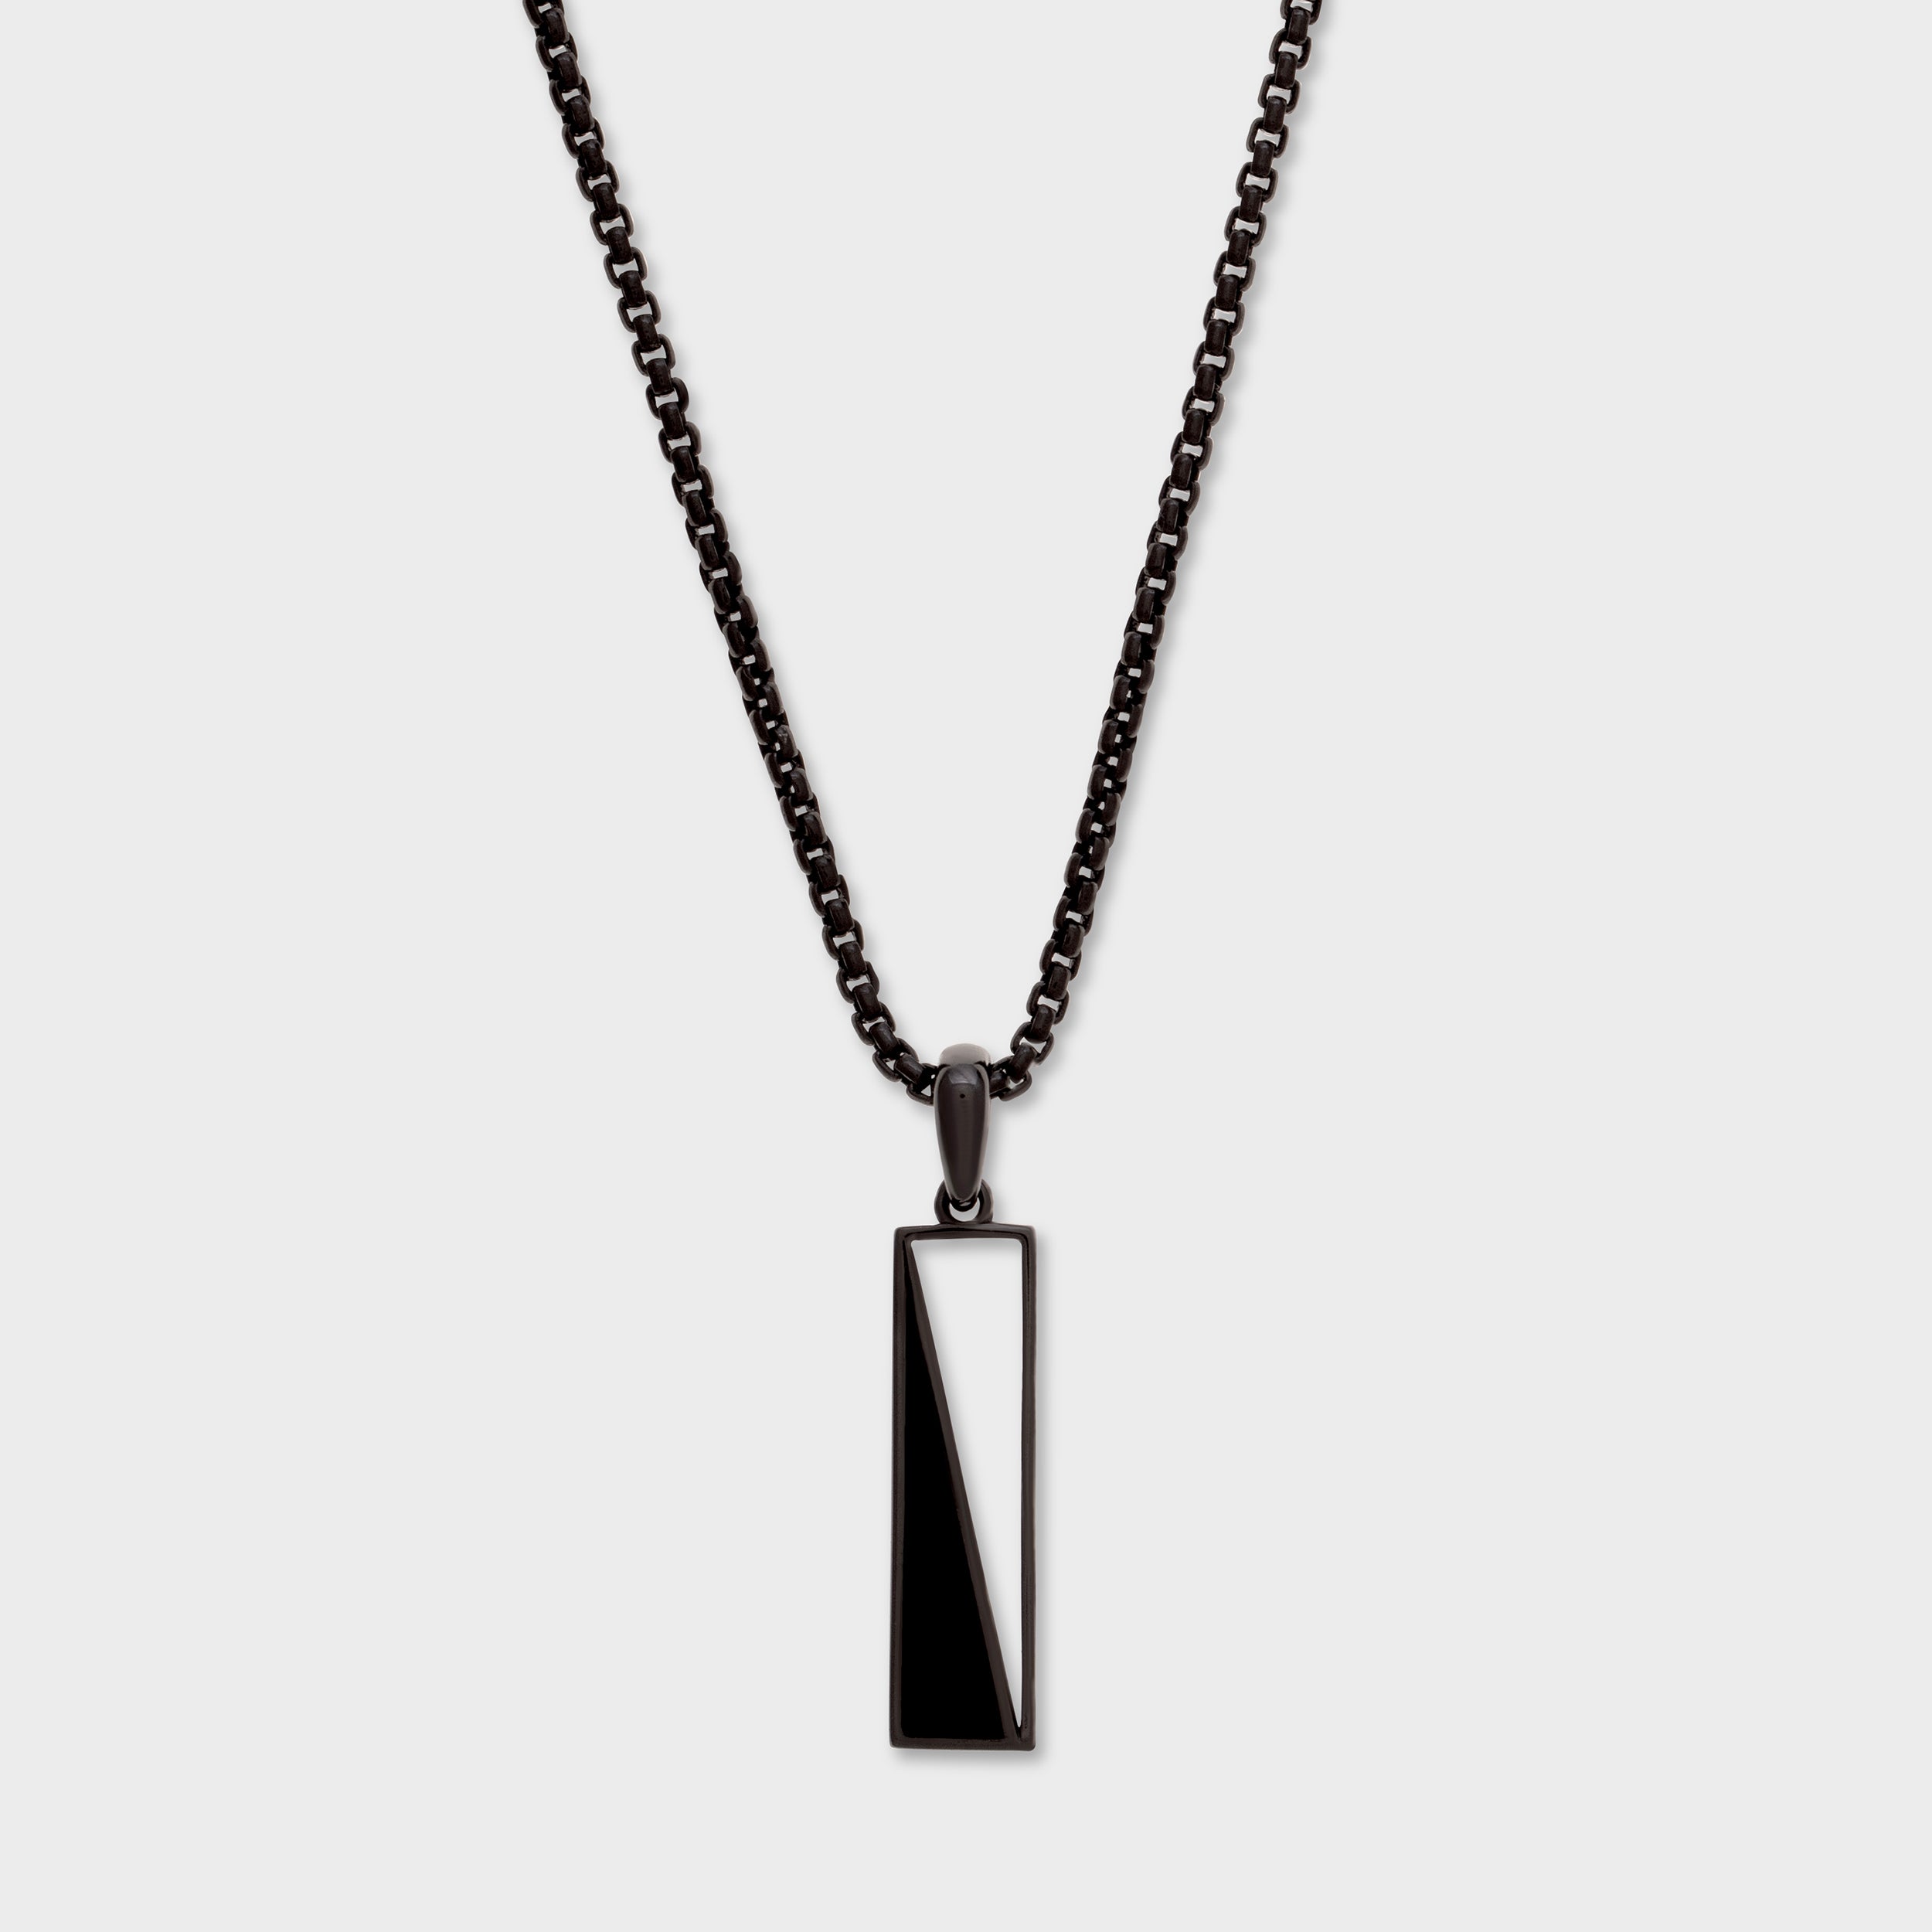 Sleek Black Silver Chain Pendant for Men | SKU : 0020418878, 0020418885